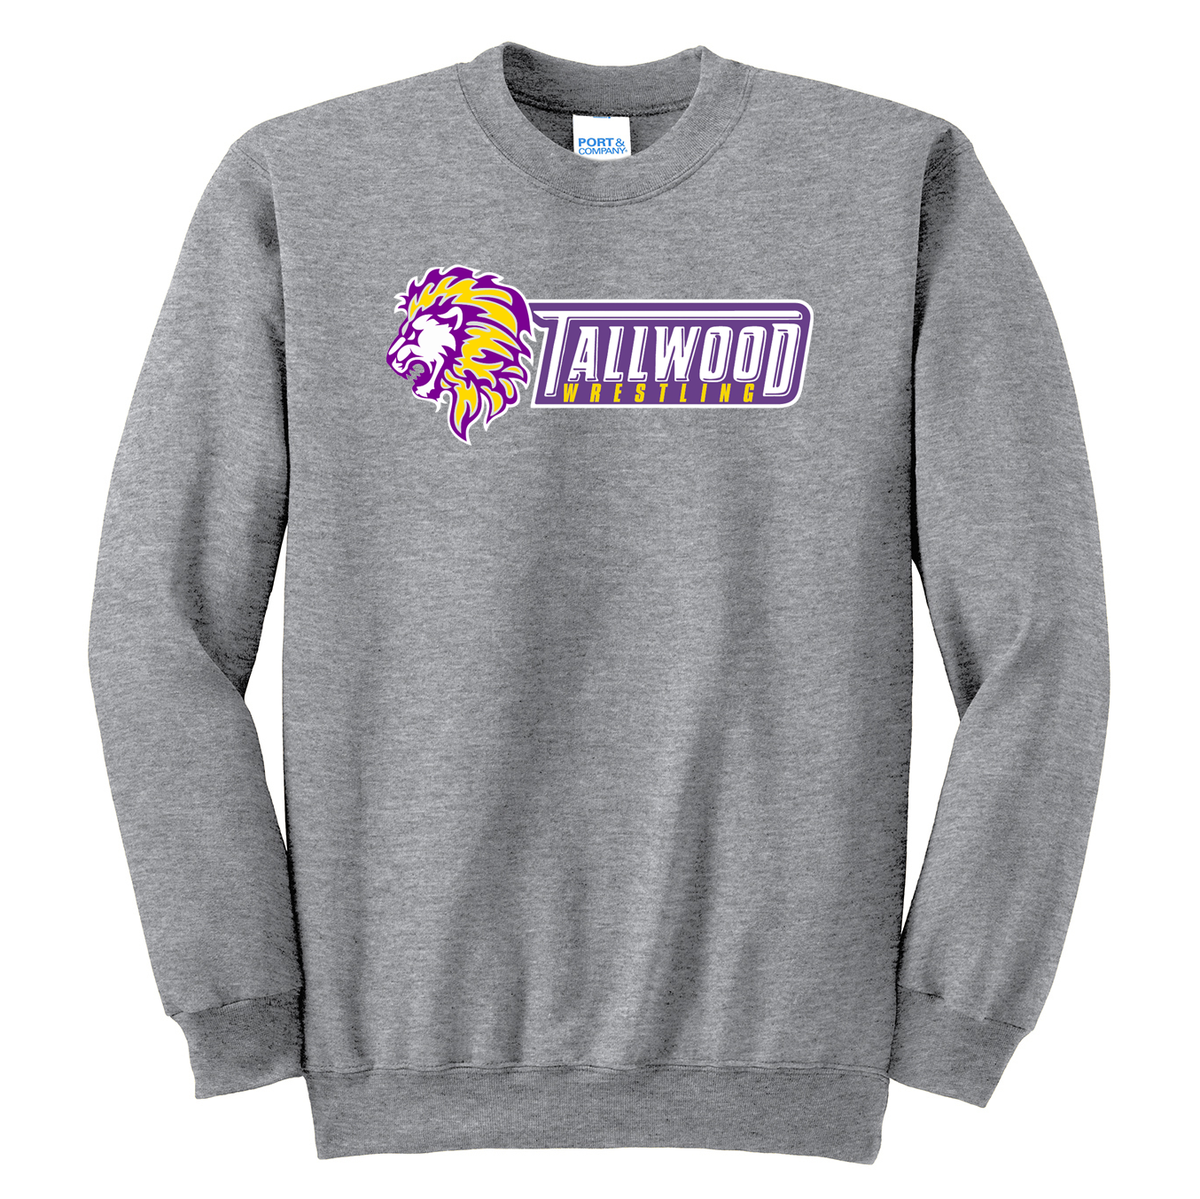 Tallwood Wrestling Crew Neck Sweater